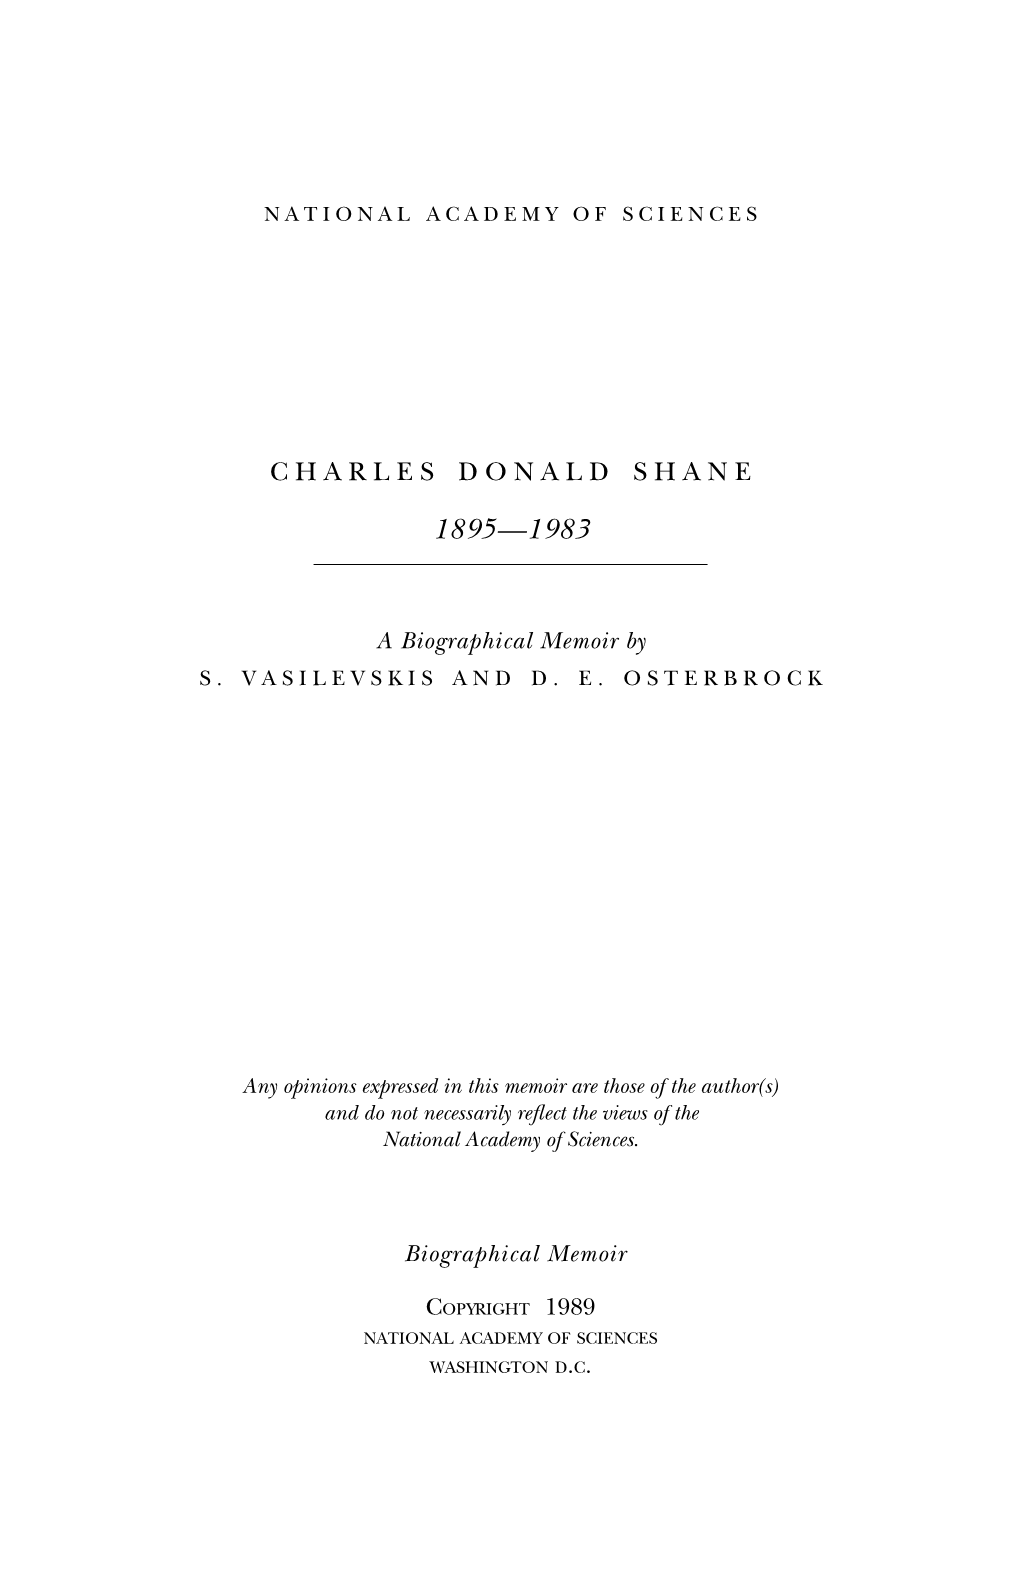 CHARLES DONALD SHANE September 6, 1895-March 19, 1983